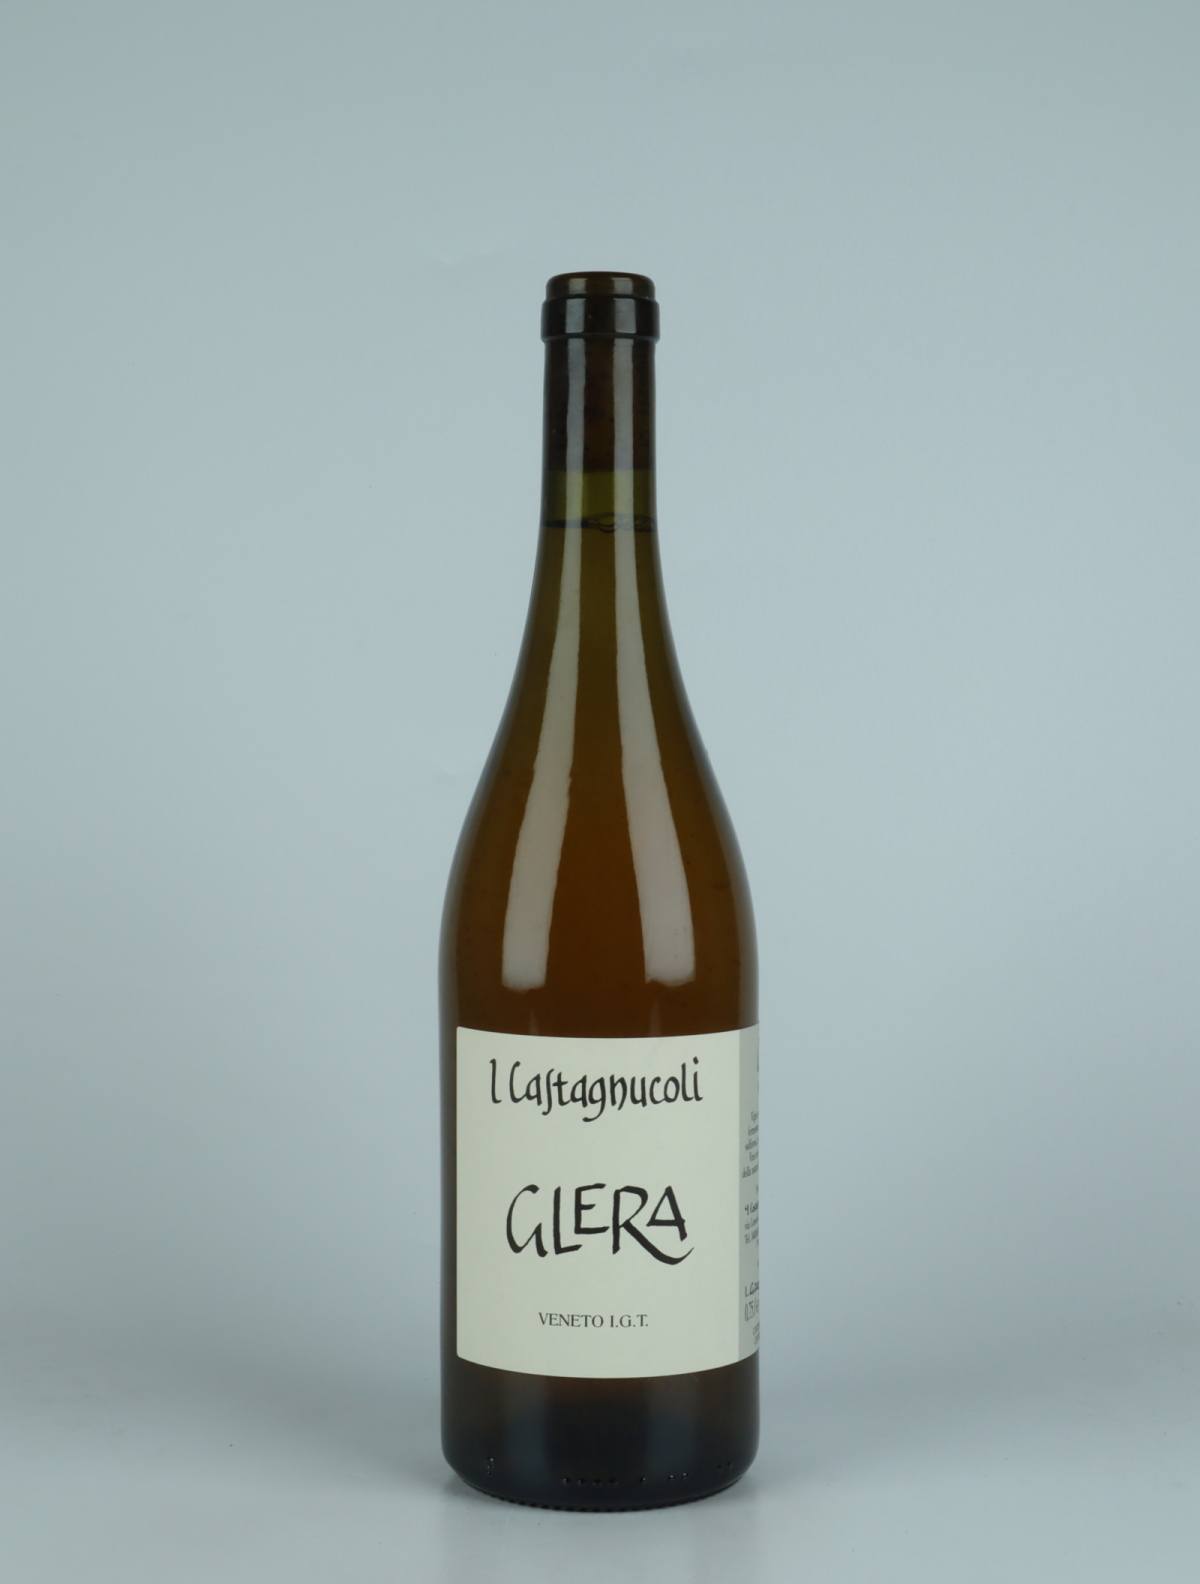 A bottle 2021 Glera White wine from I Castagnucoli, Veneto in Italy